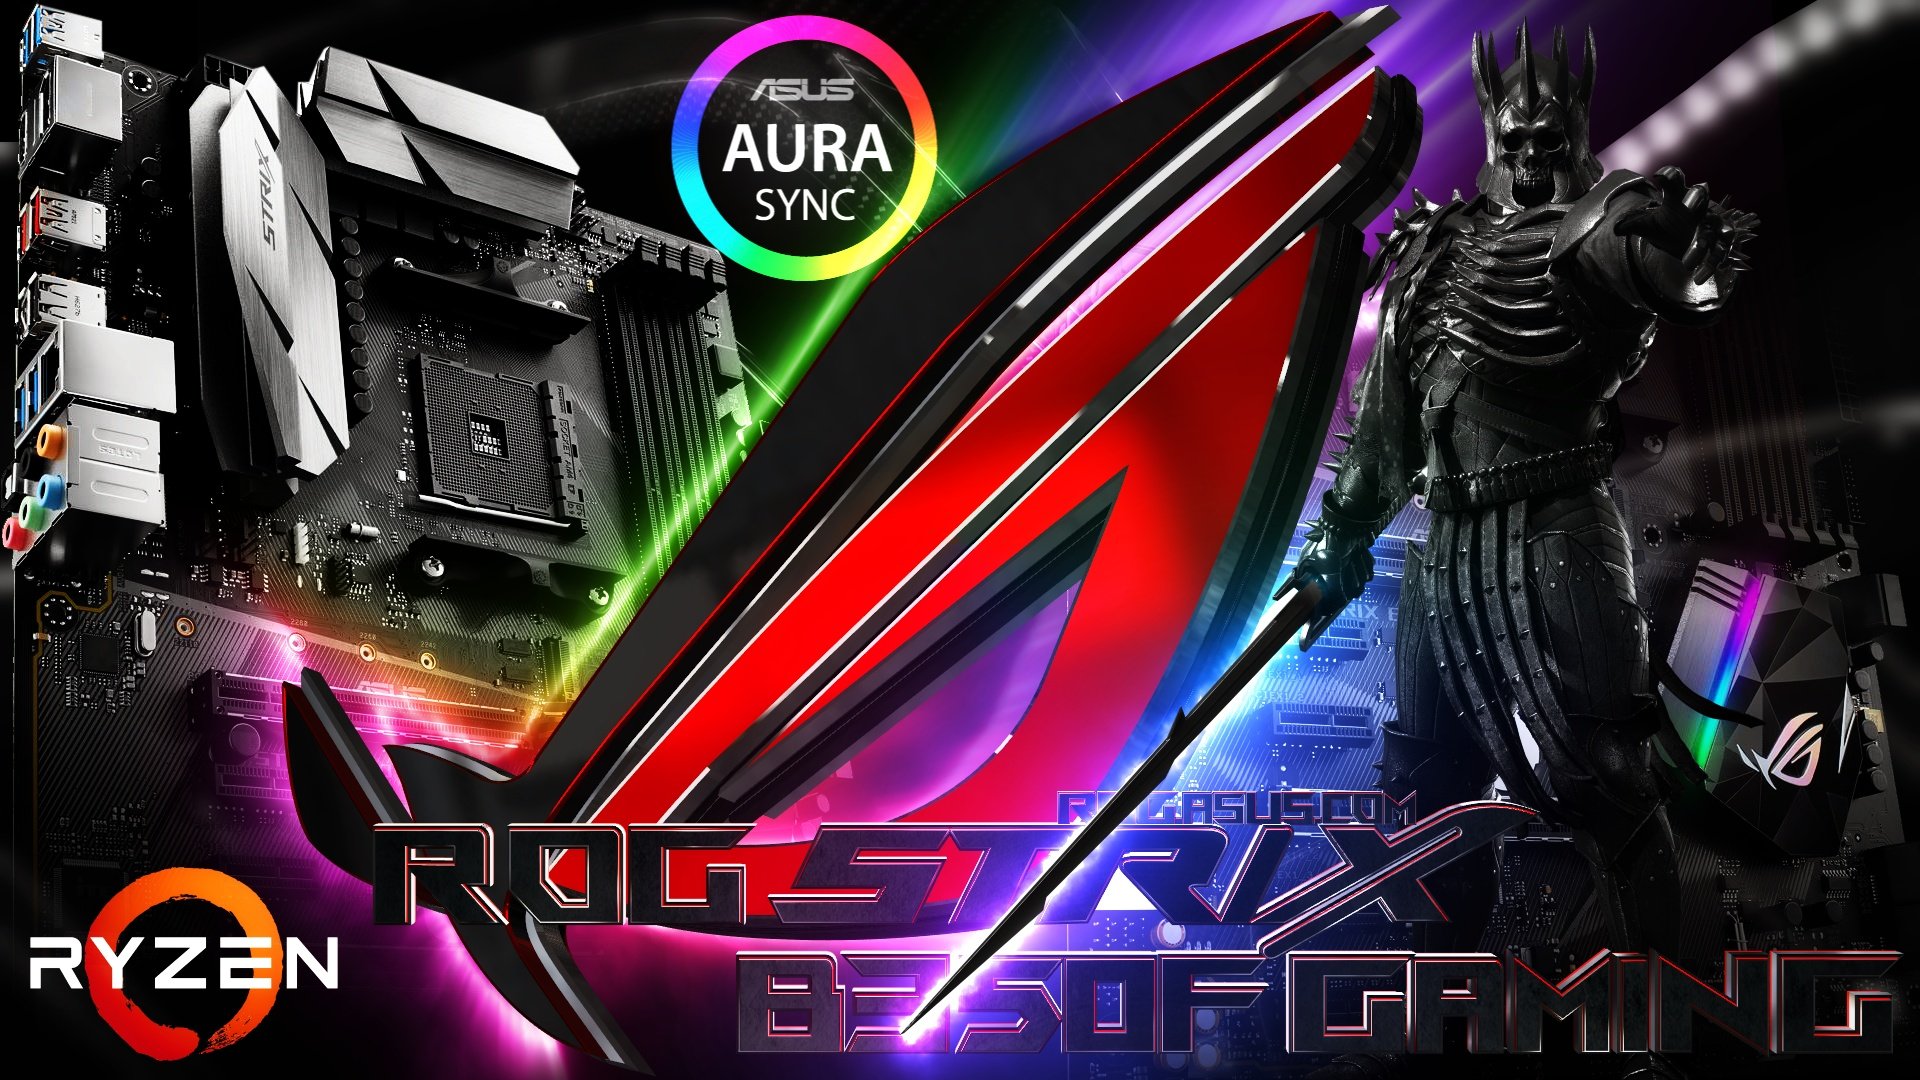 Rog tuf gaming. ASUS ROG Strix обои. ASUS ROG 7 Ultimate. Обои на ПК игровые асус.